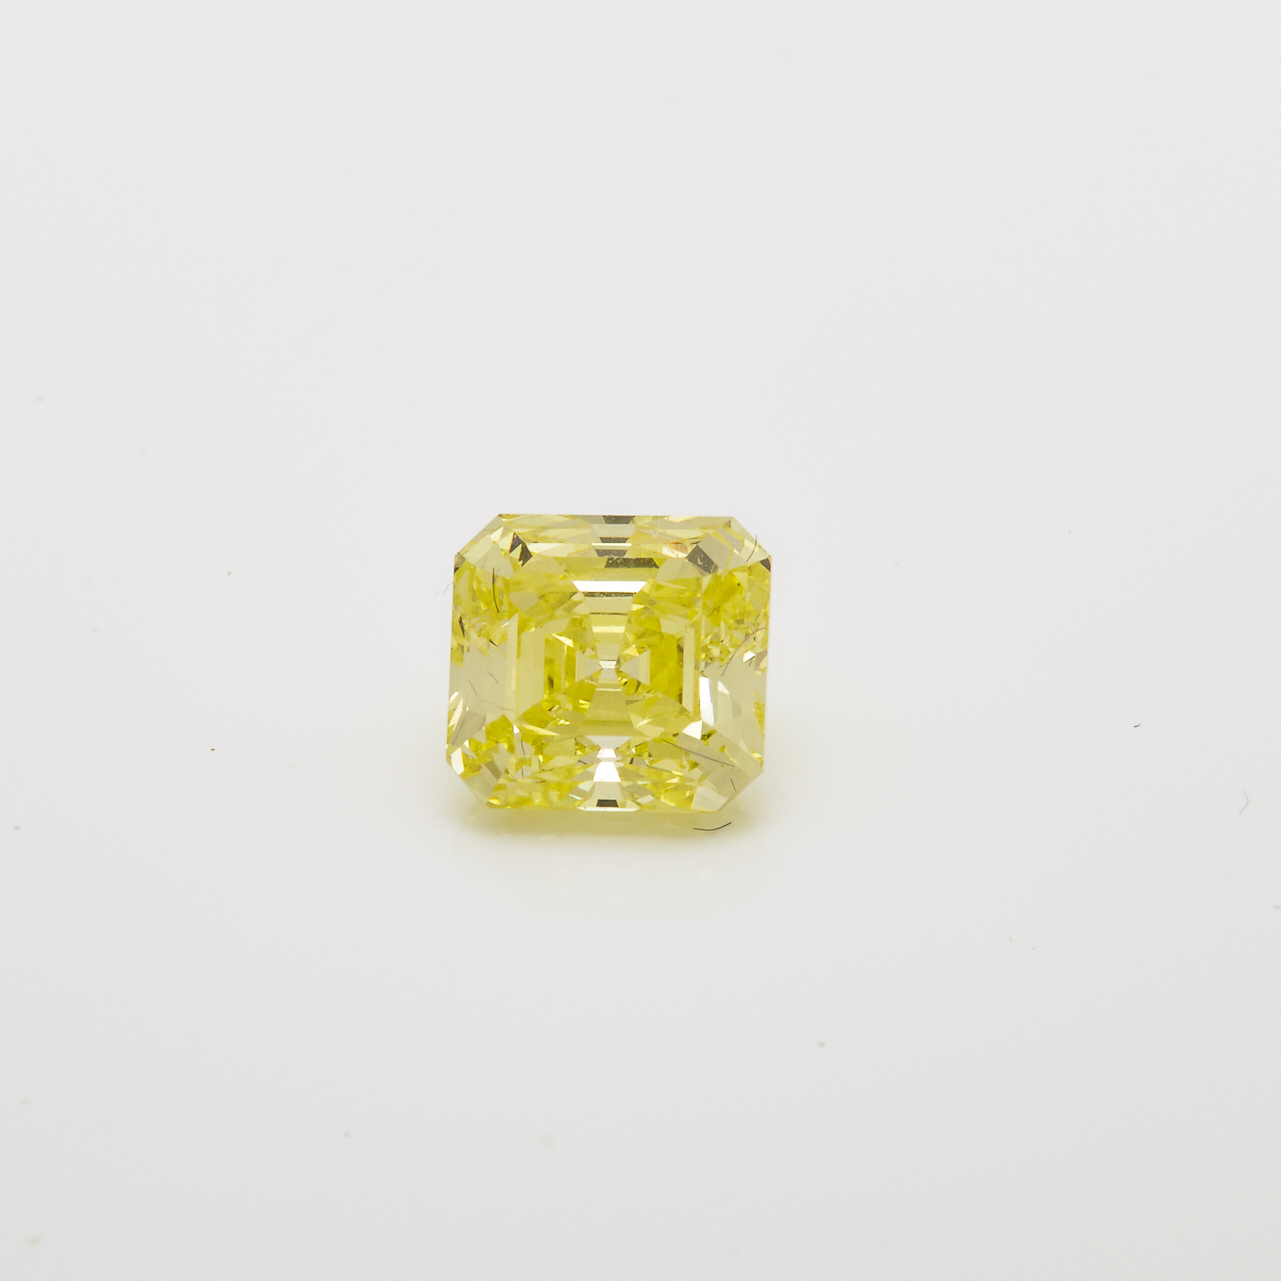 Unmounted Emerald Cut Yellow Diamond